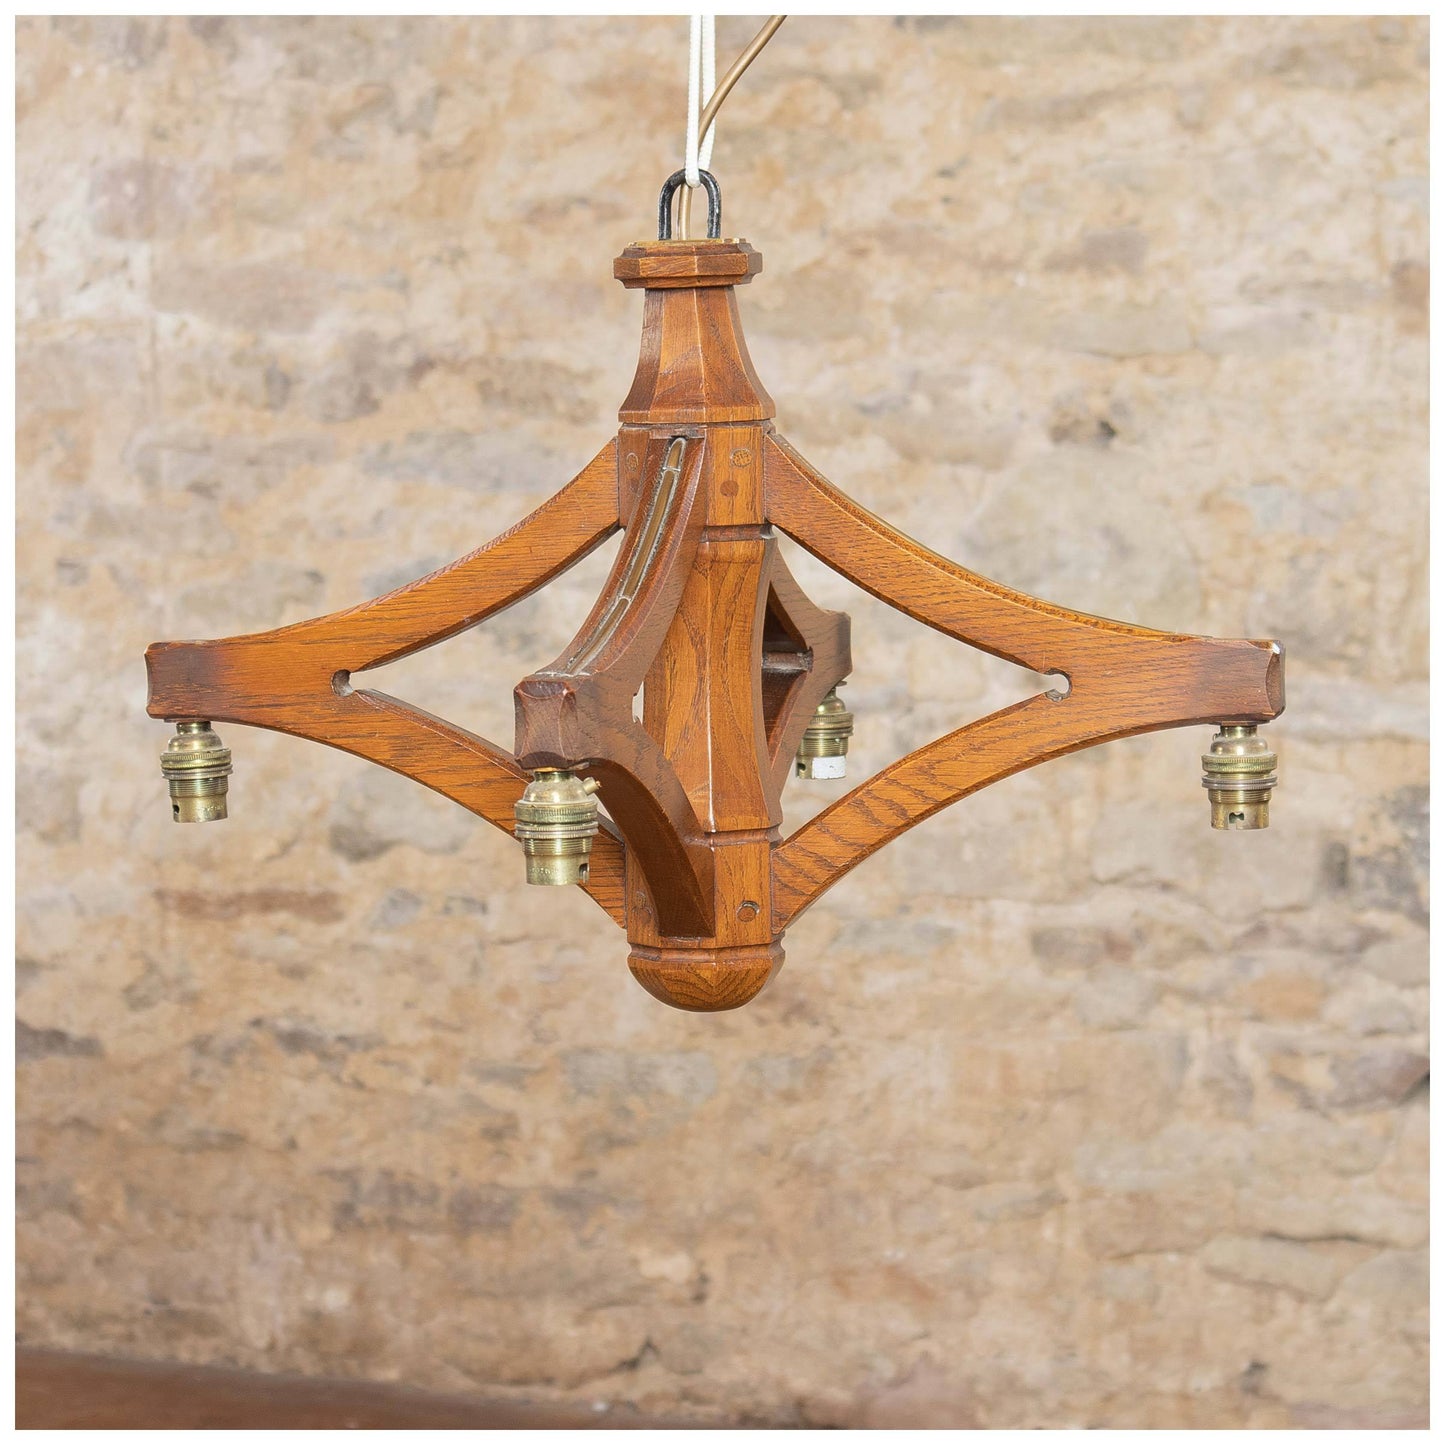 Acornman (Ex-Mouseman) Arts & Crafts Yorkshire School English Oak Ceiling Lamp